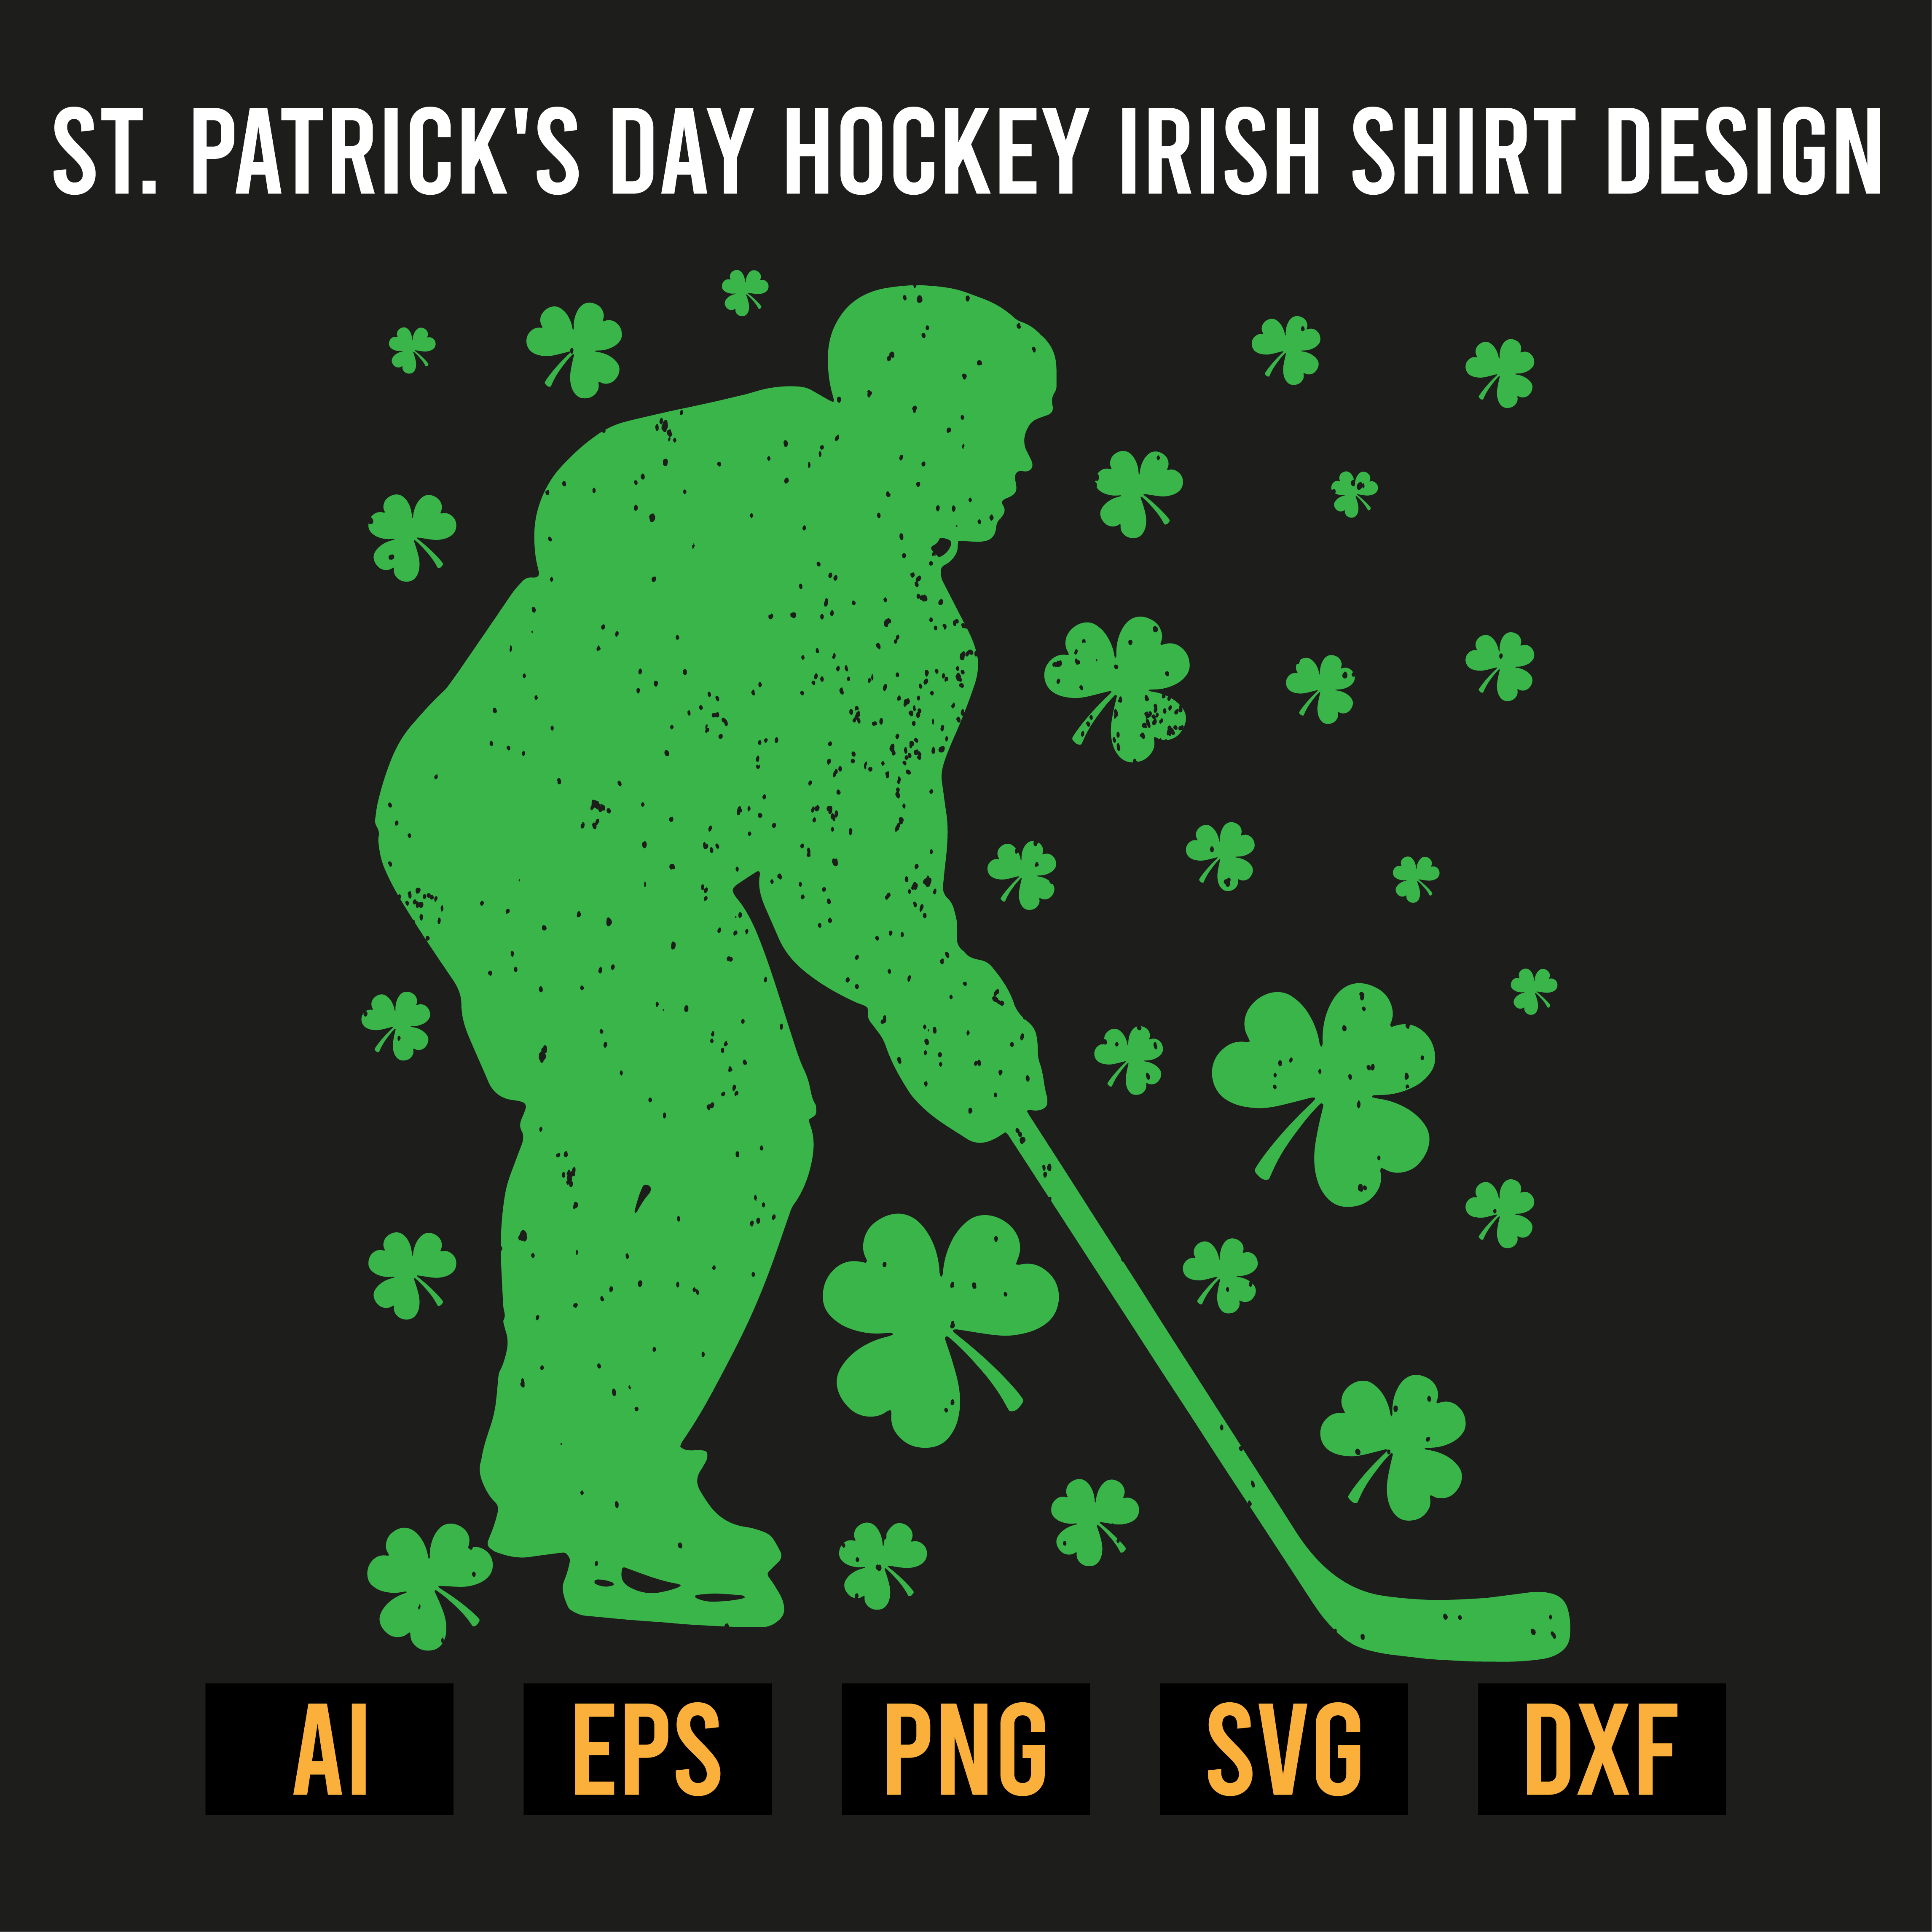 St Patrick's Day Hockey Irish Shirt Design preview image.